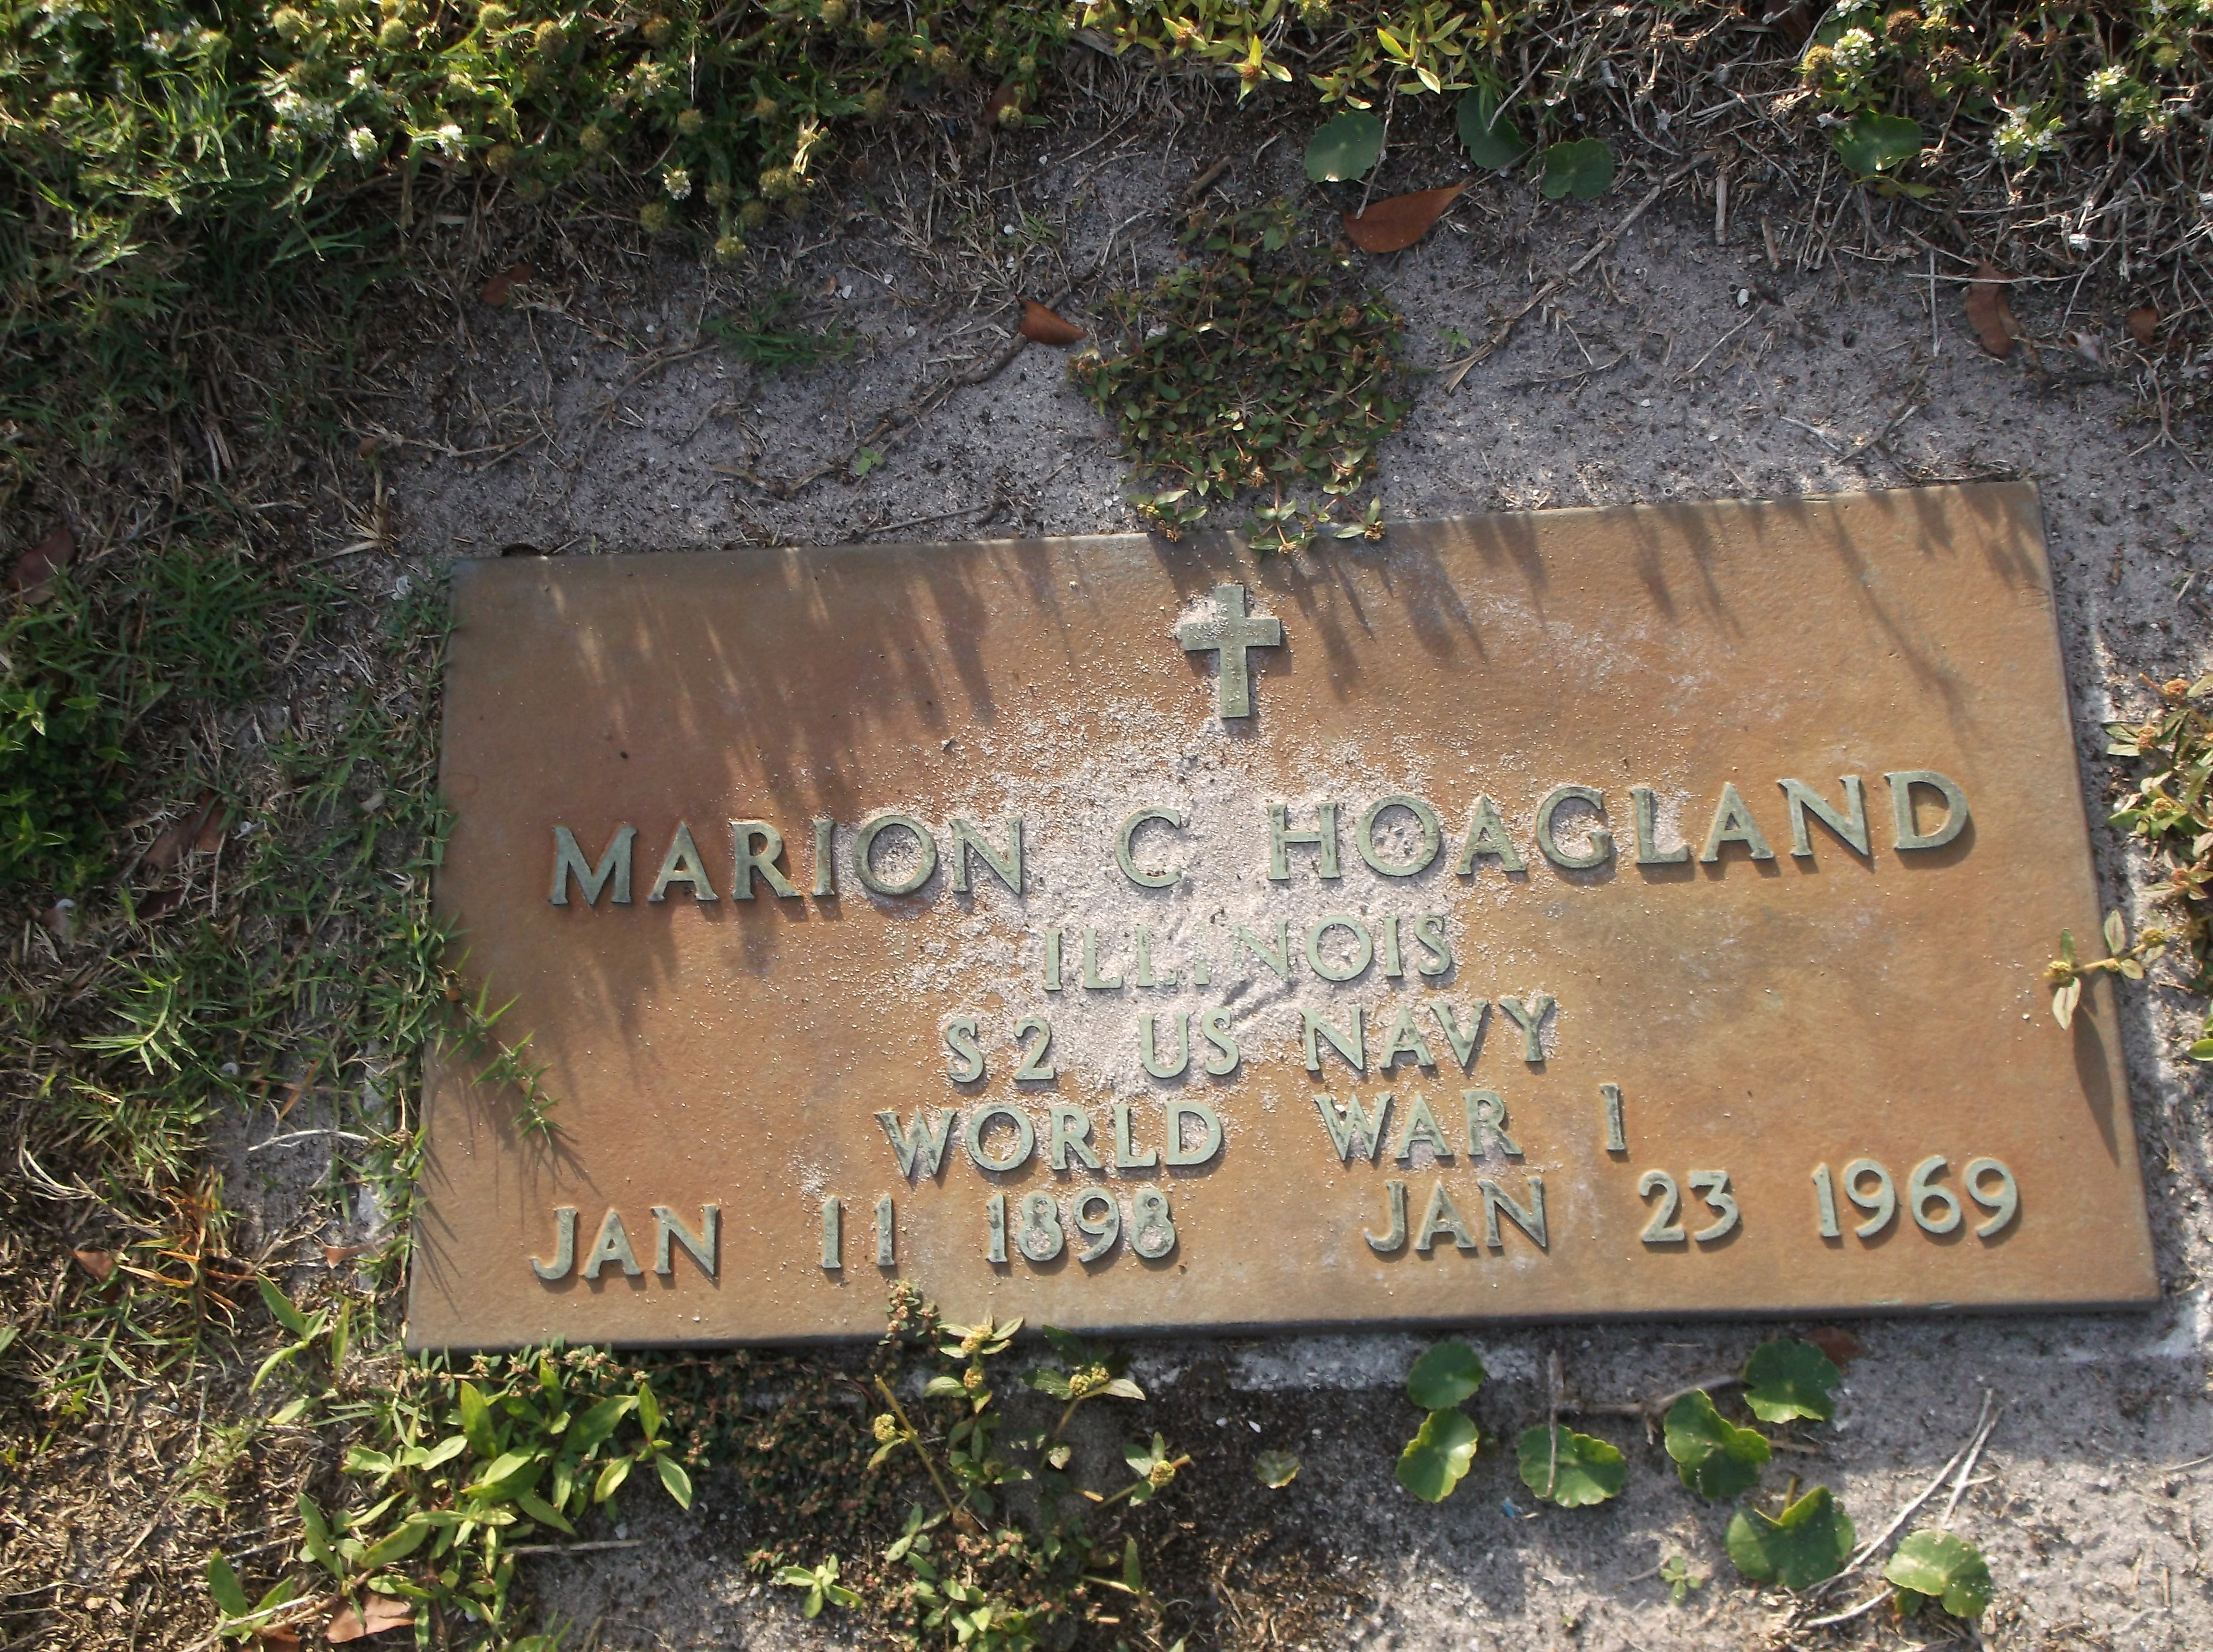 Marion C Hoagland